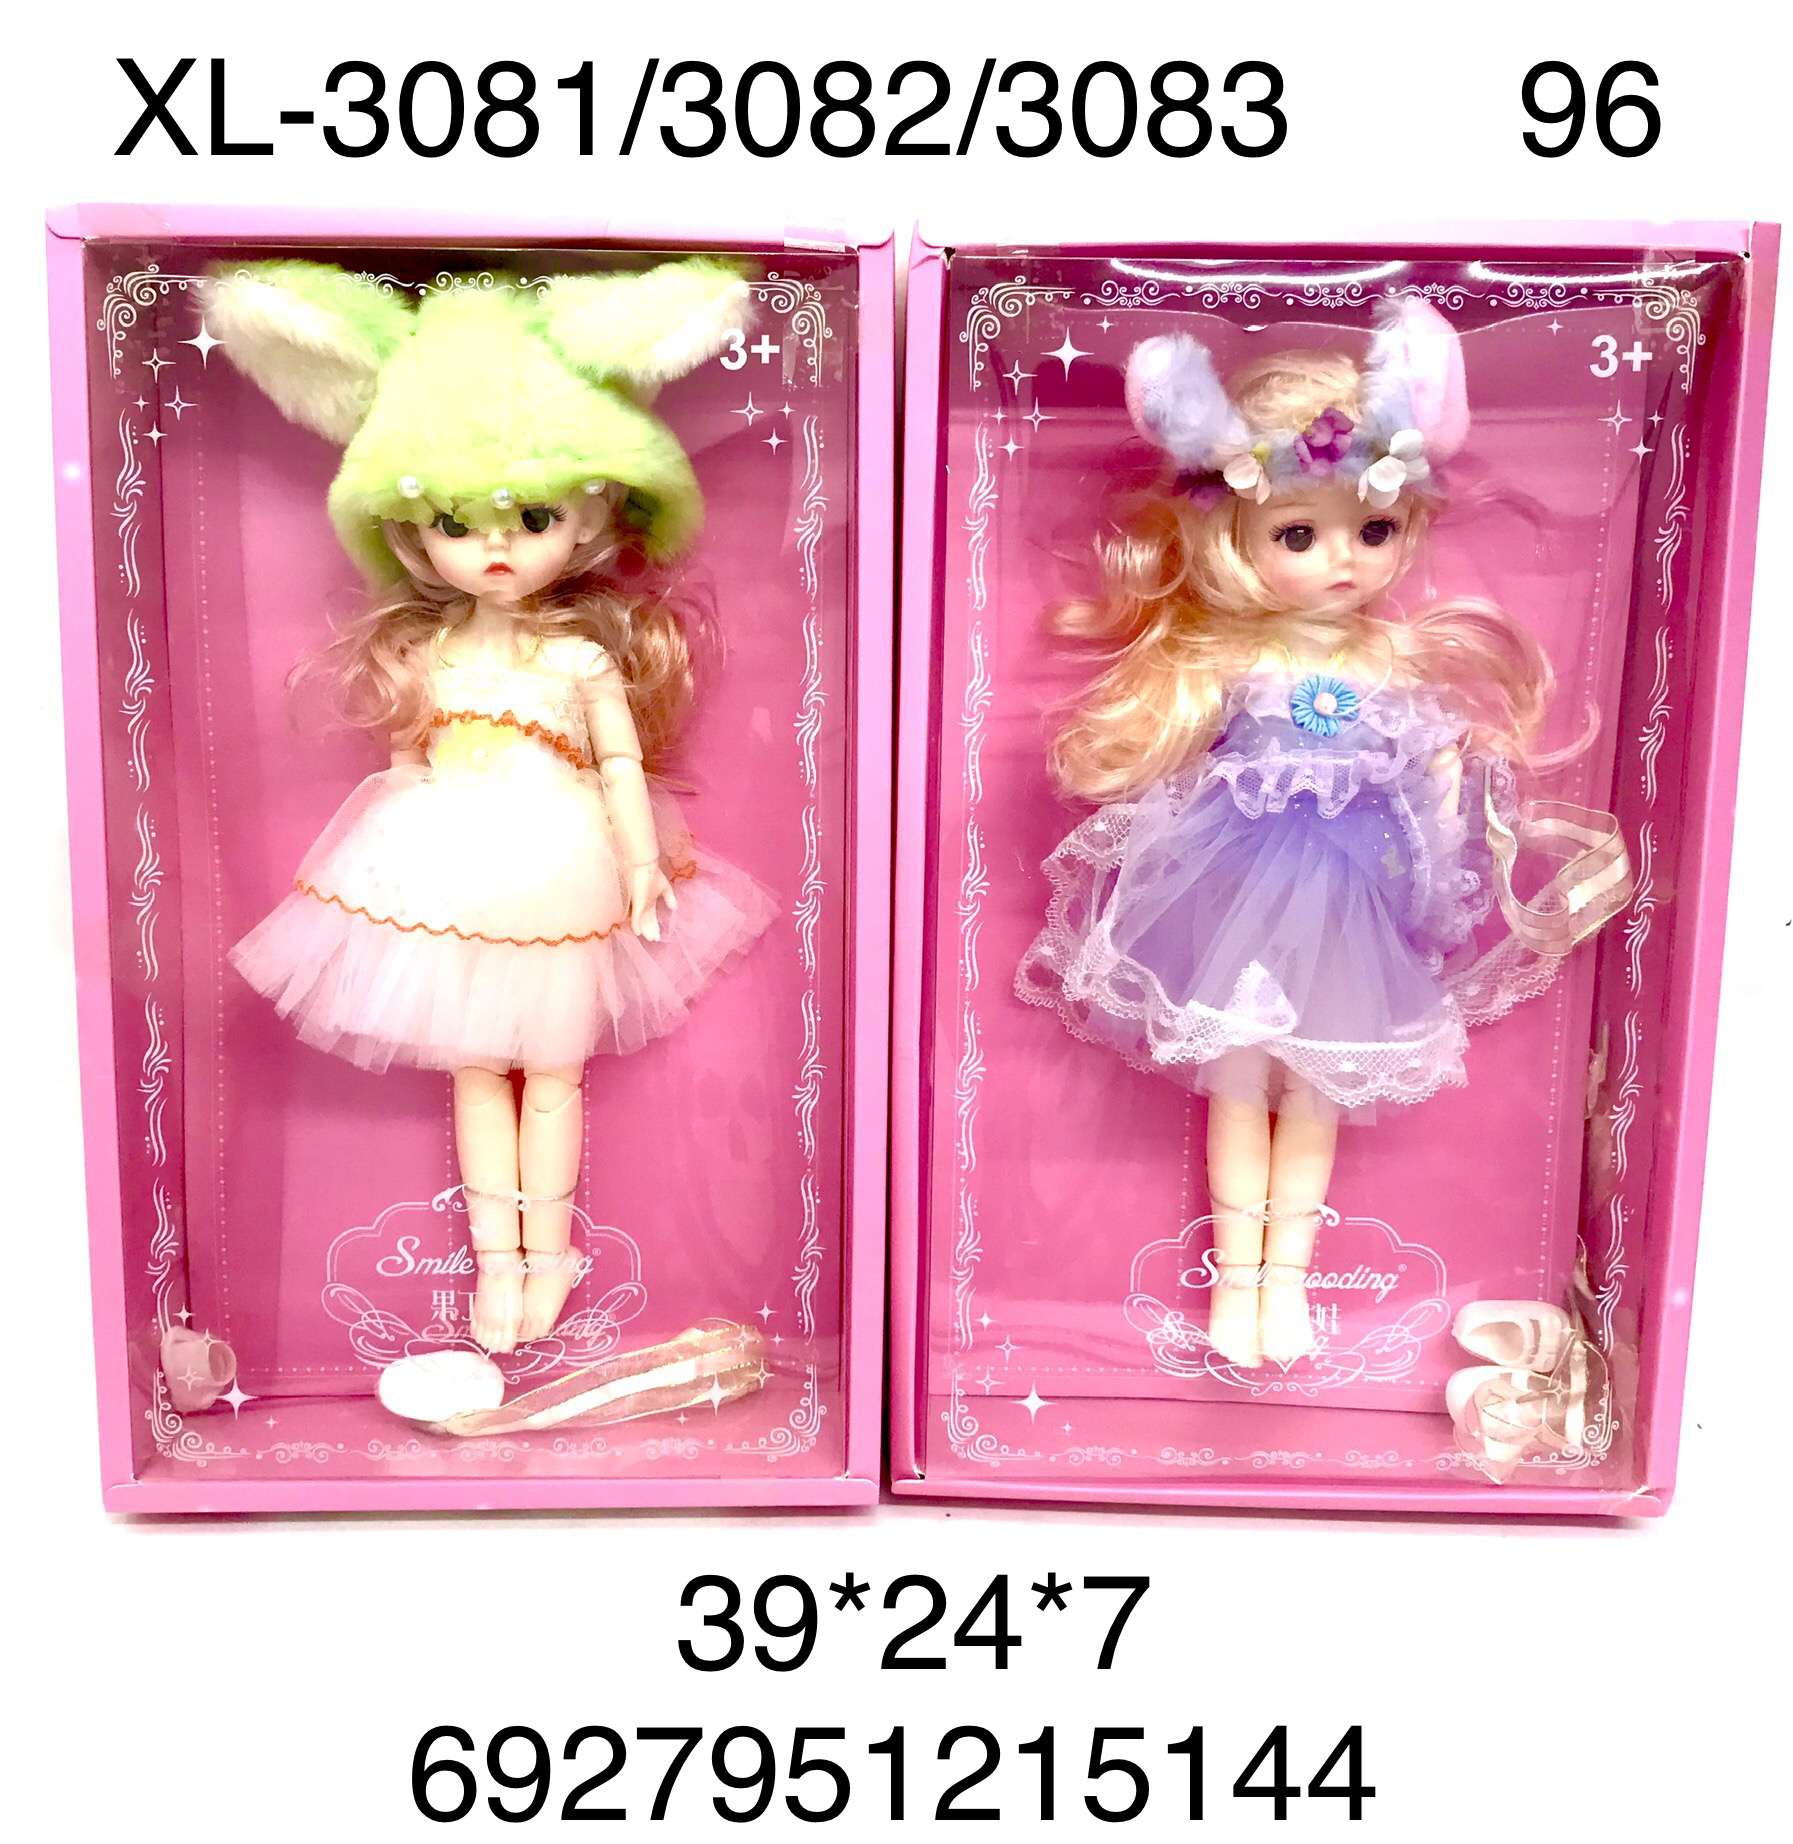 Кукла XL-3081/3082/3083 Smile в ассортименте - Волгоград 